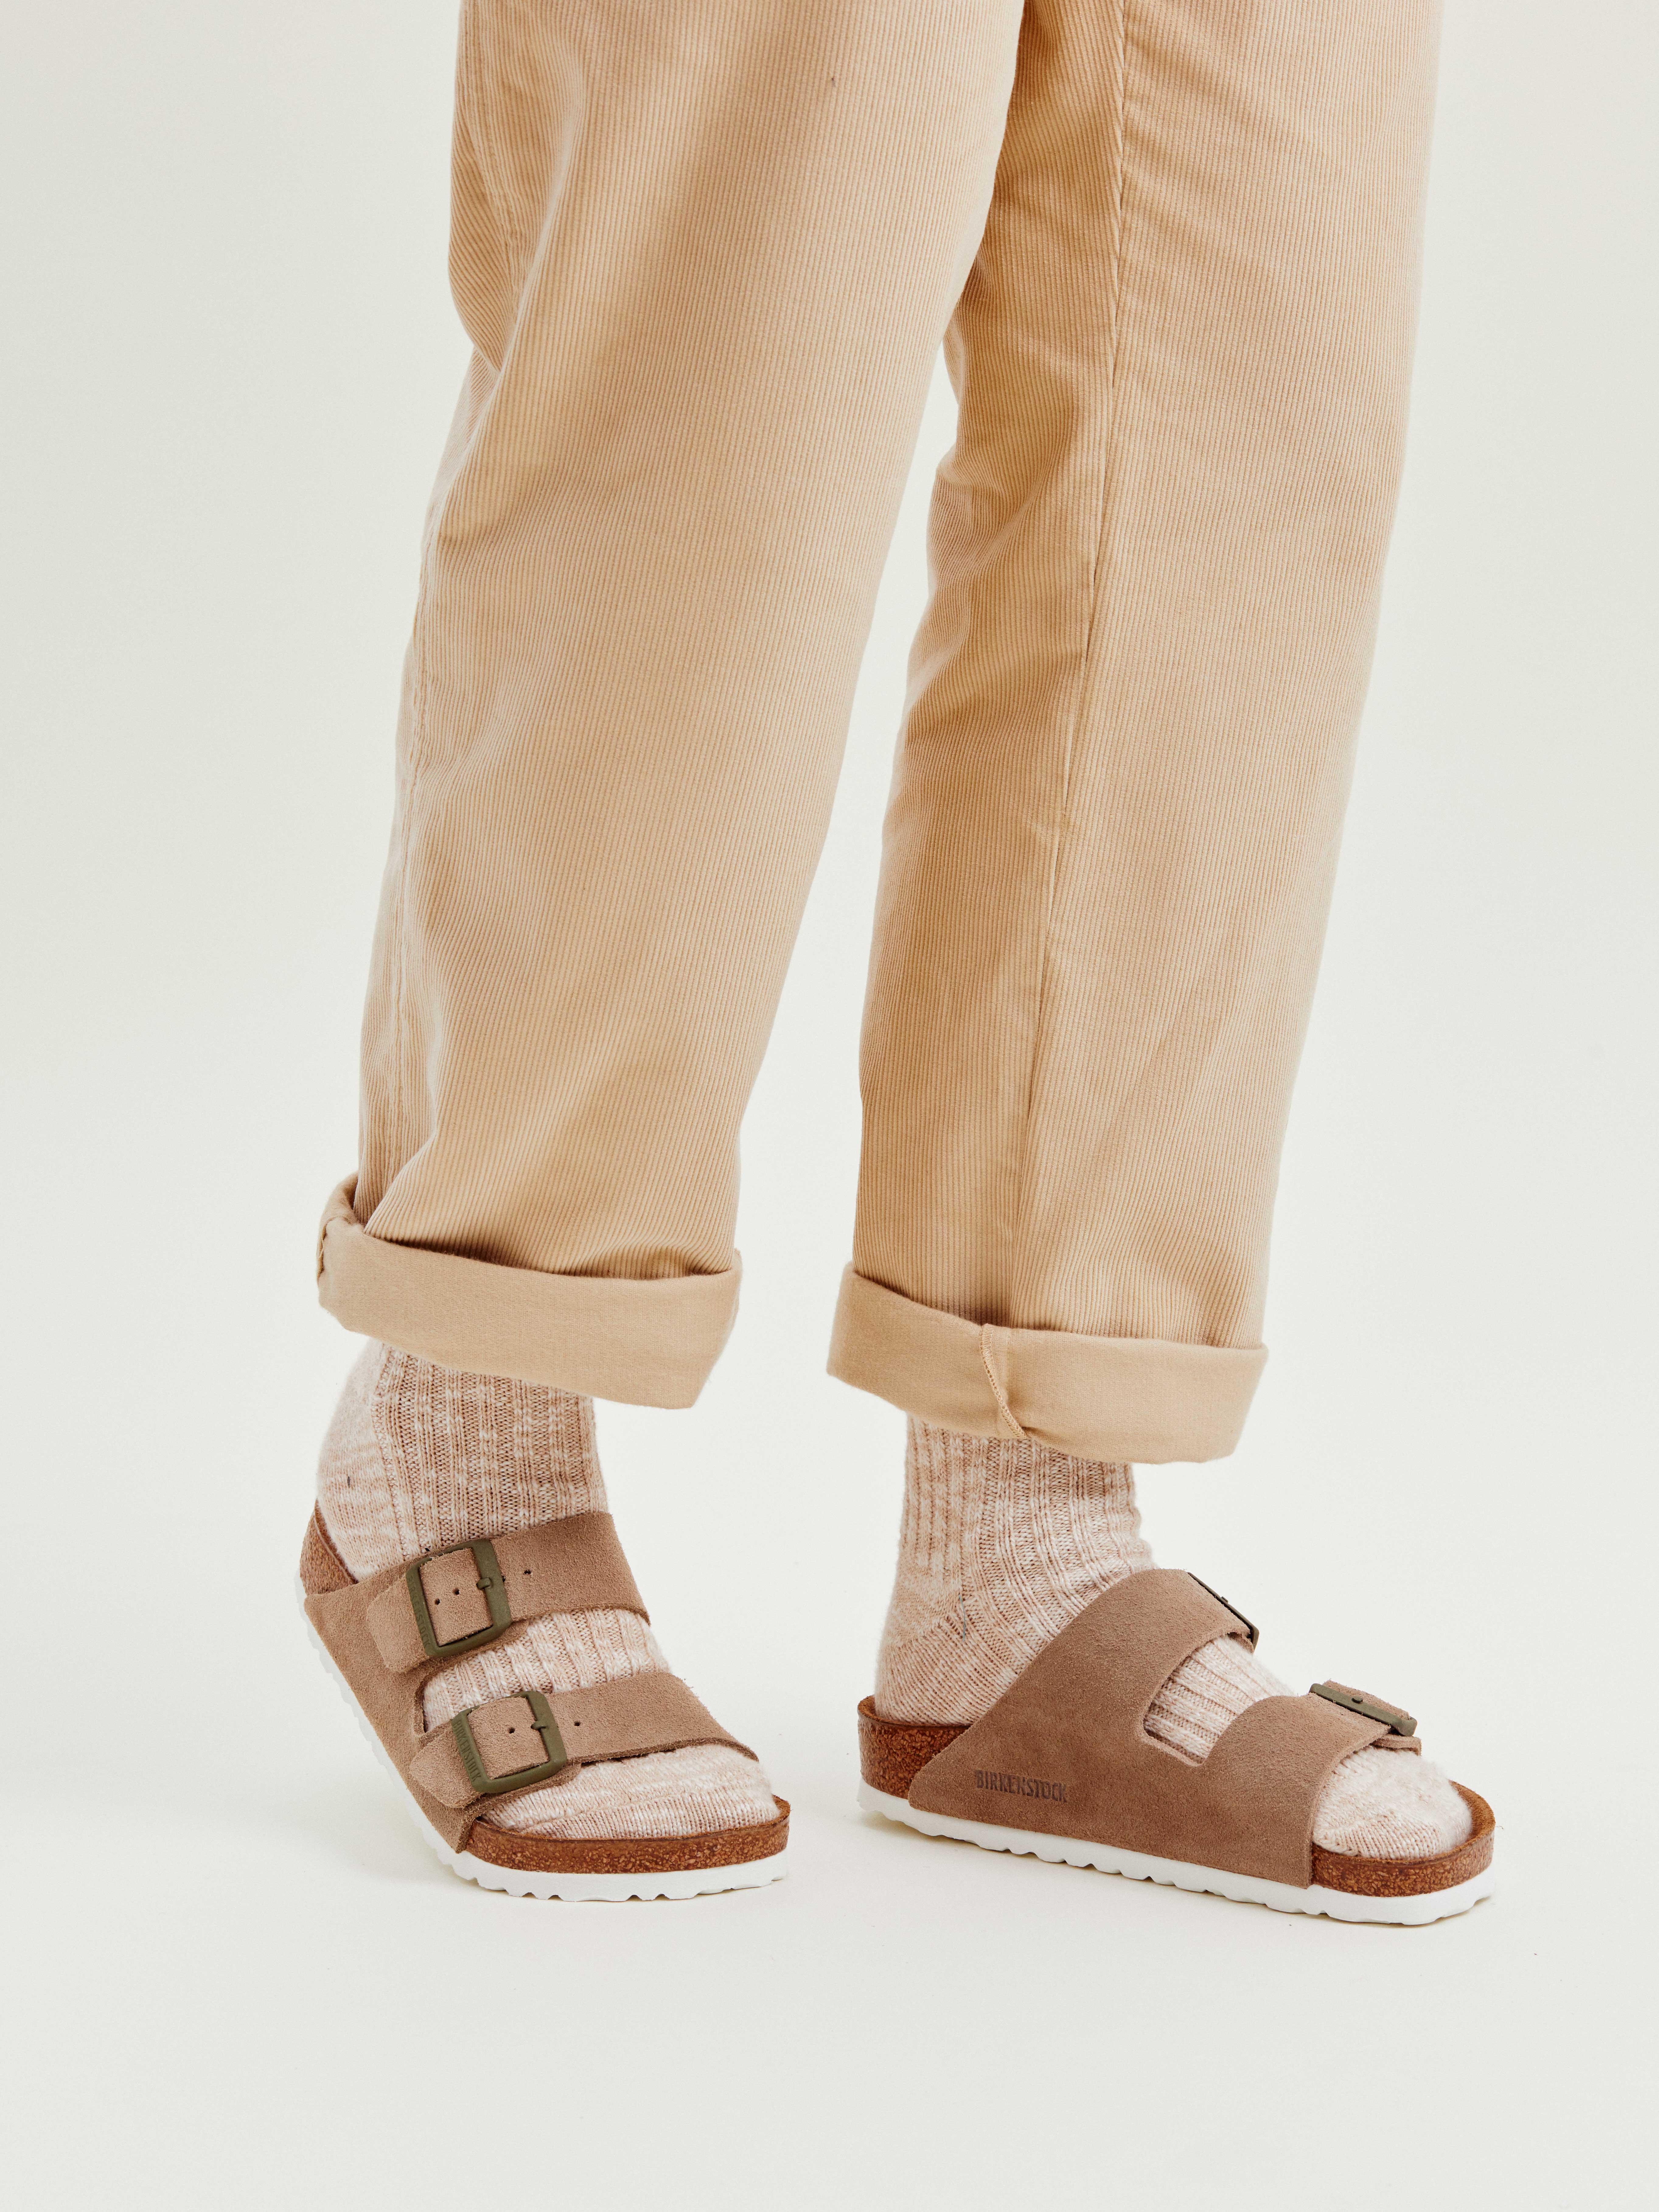 Arizona sandal with socks - Birkenstock 